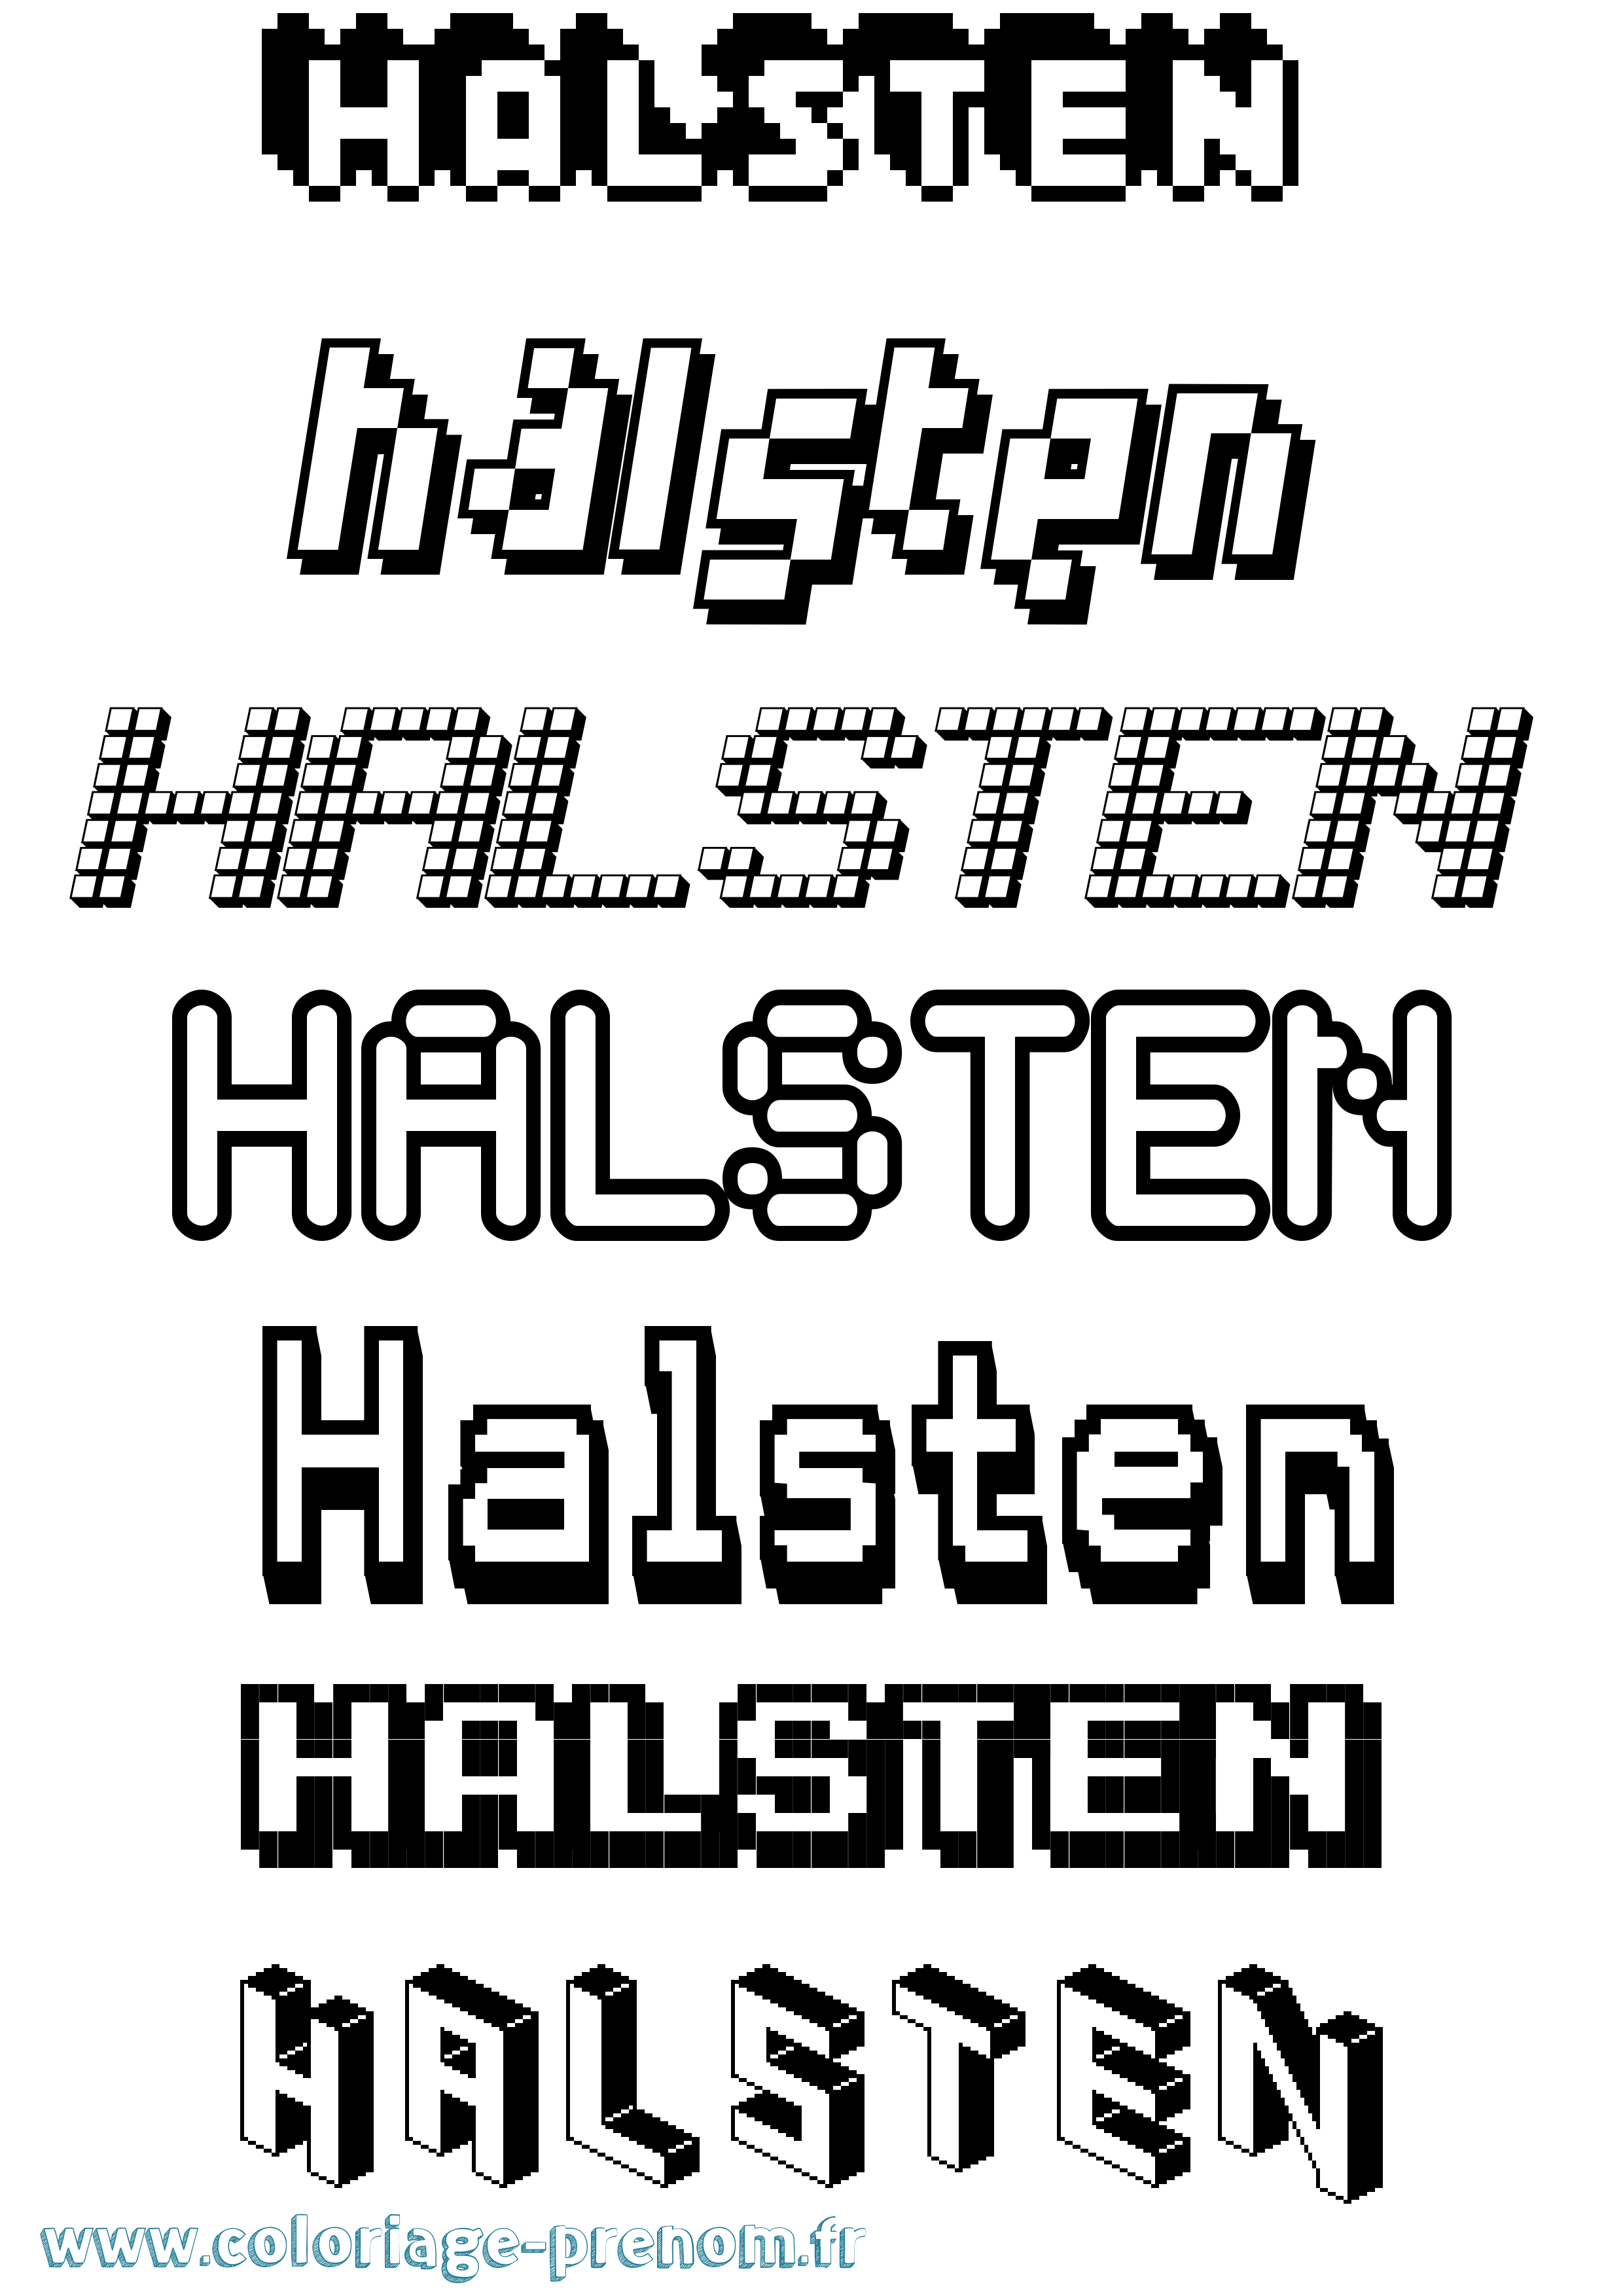 Coloriage prénom Halsten Pixel